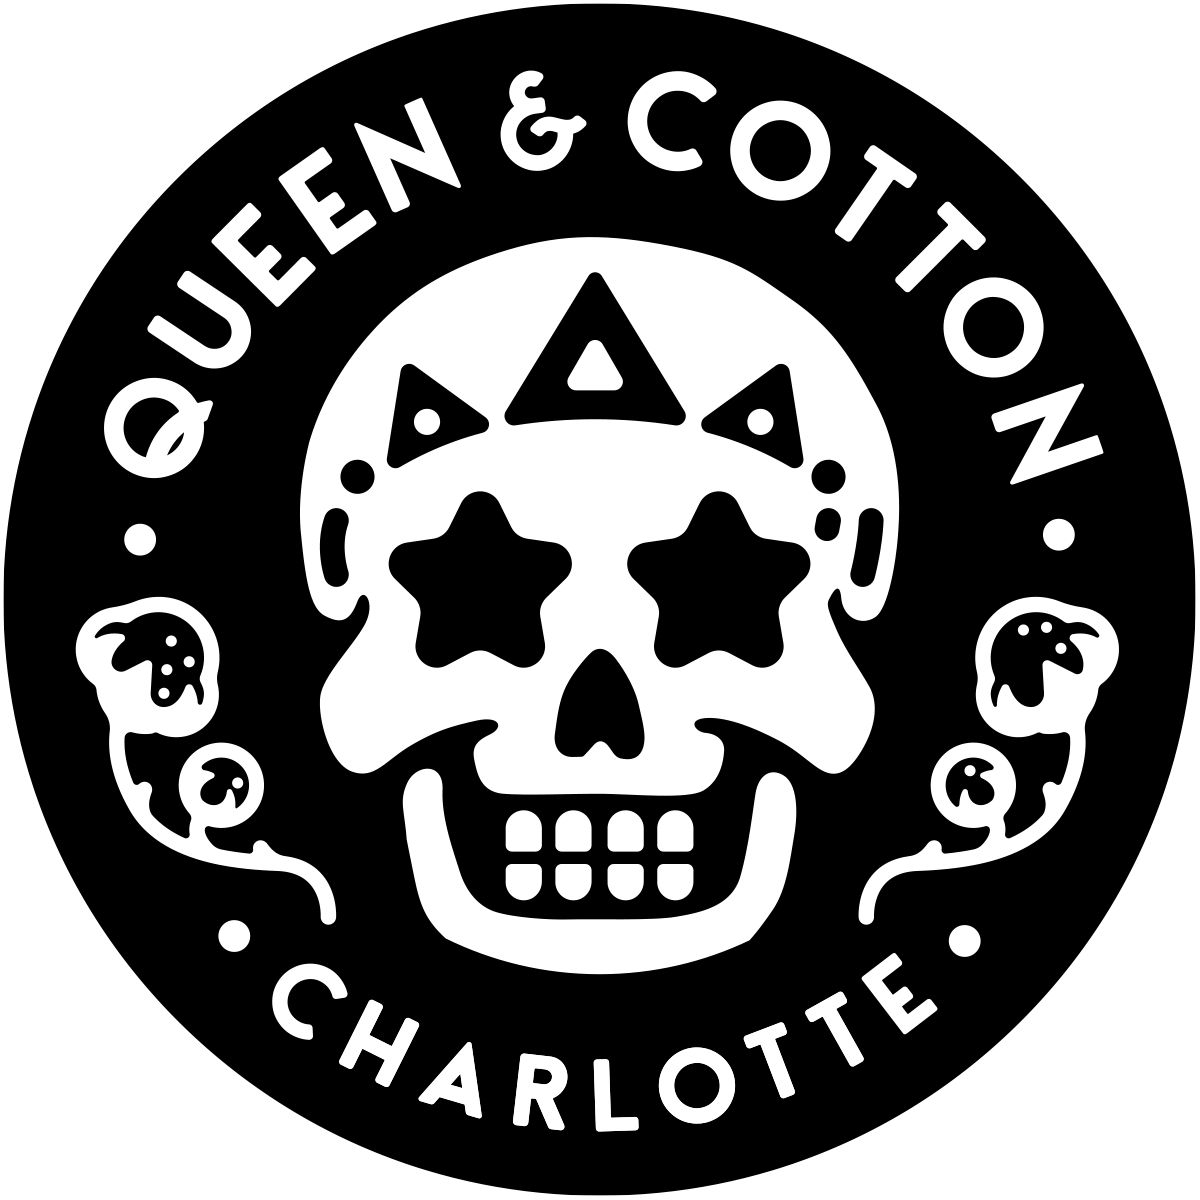 Queen & Cotton